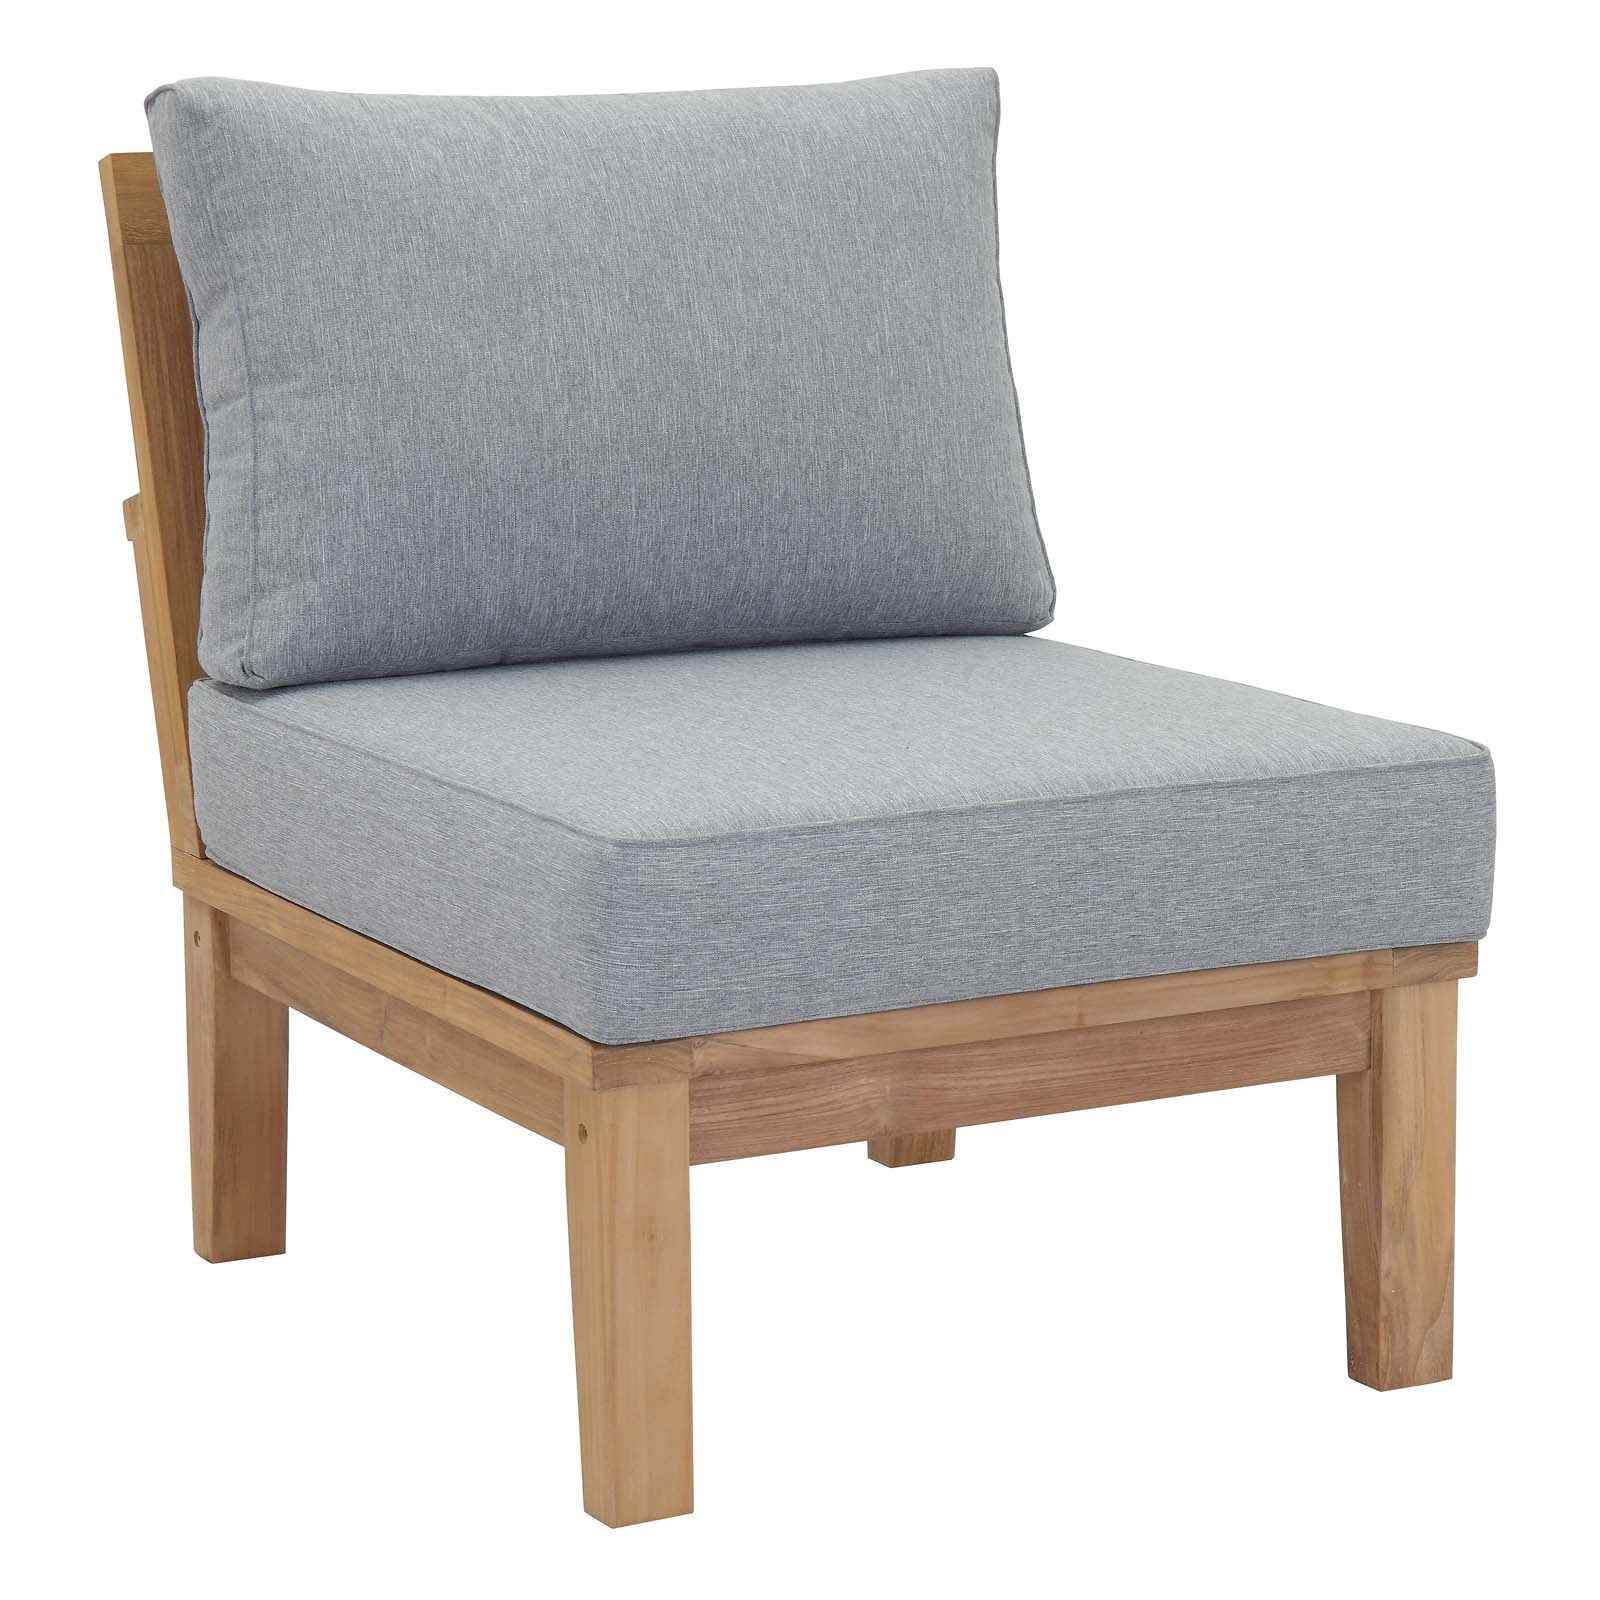 Modway Outdoor Chairs - Marina 2 Piece Outdoor Patio Teak Set Natural Gray